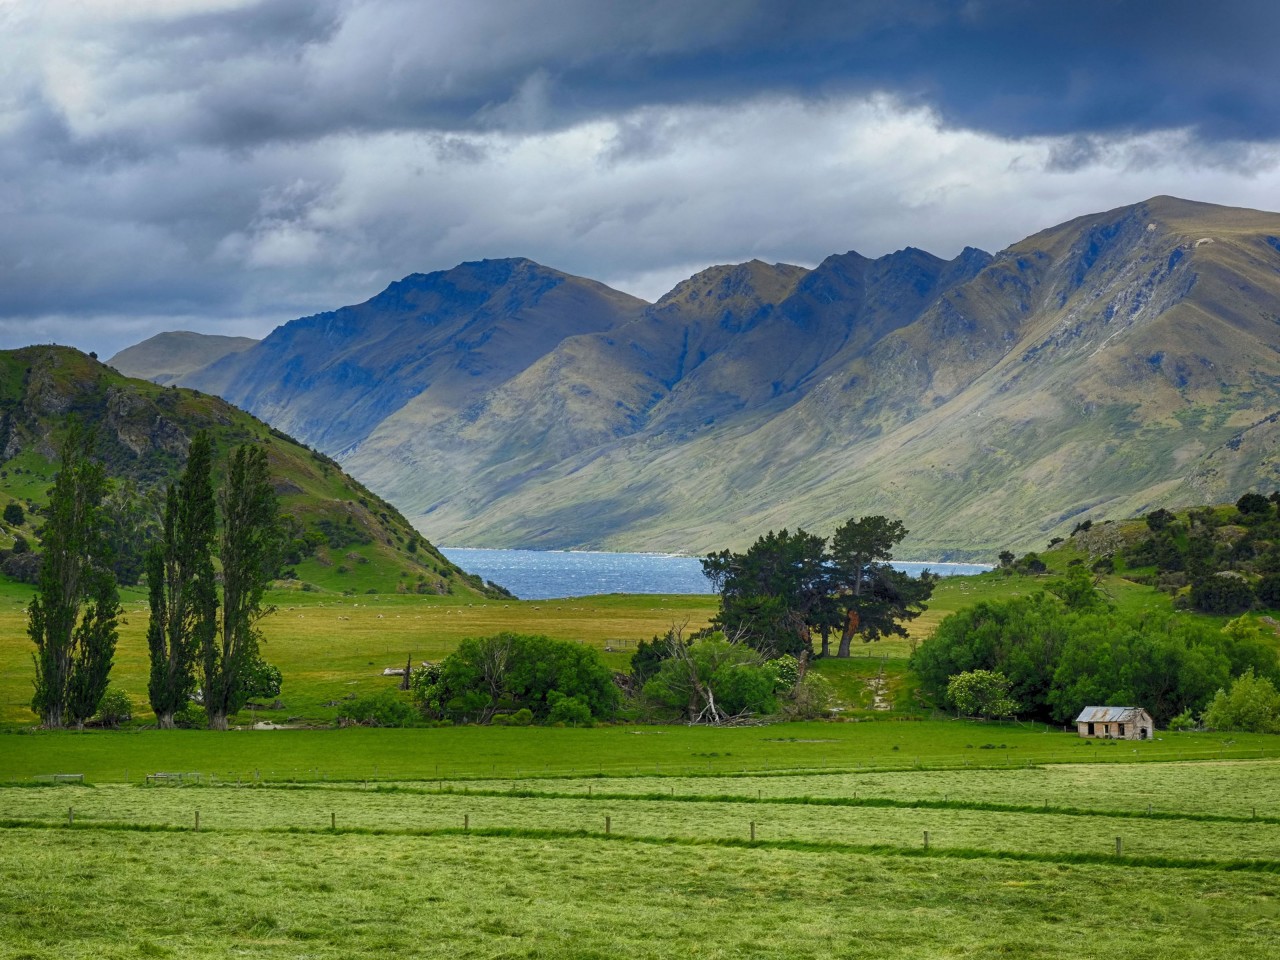 beautiful image hd wallpaper,highland,natural landscape,mountainous landforms,nature,mountain